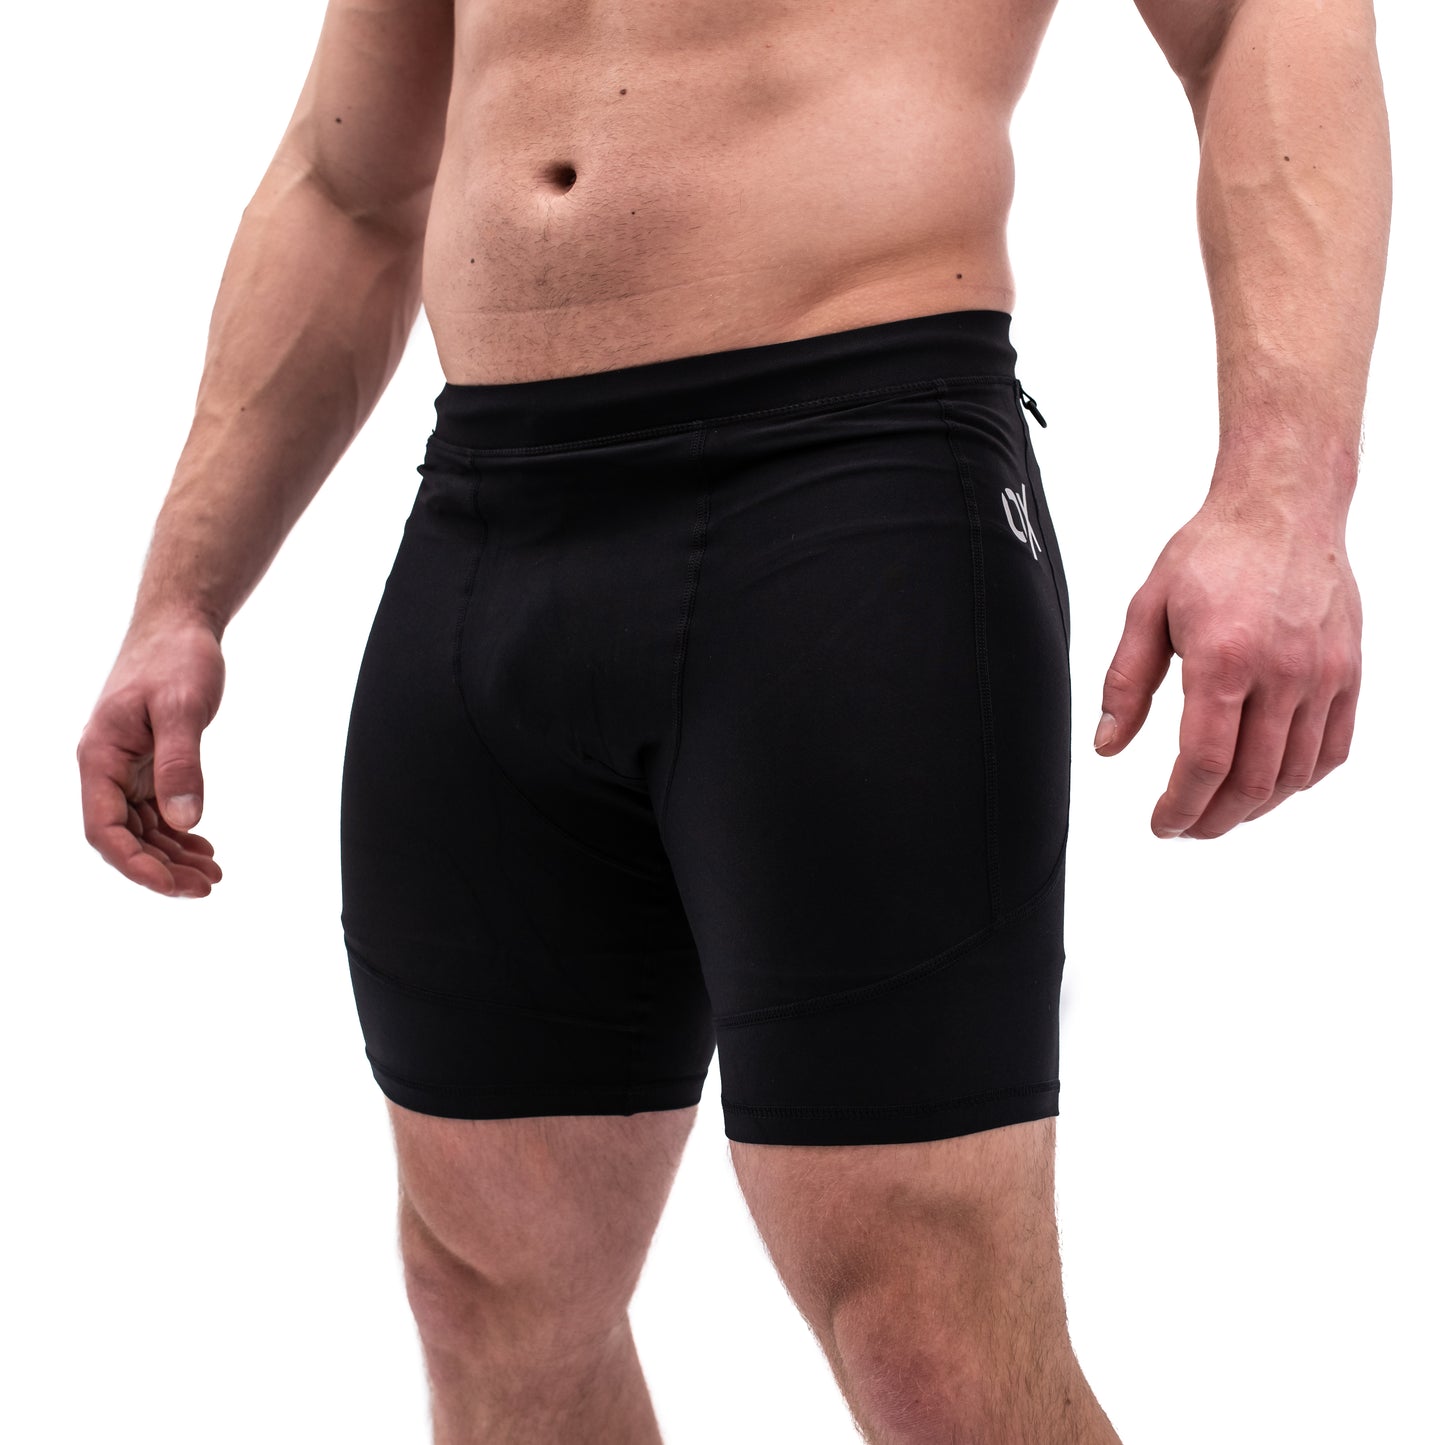 Ox Men's Compression Pants - Ember